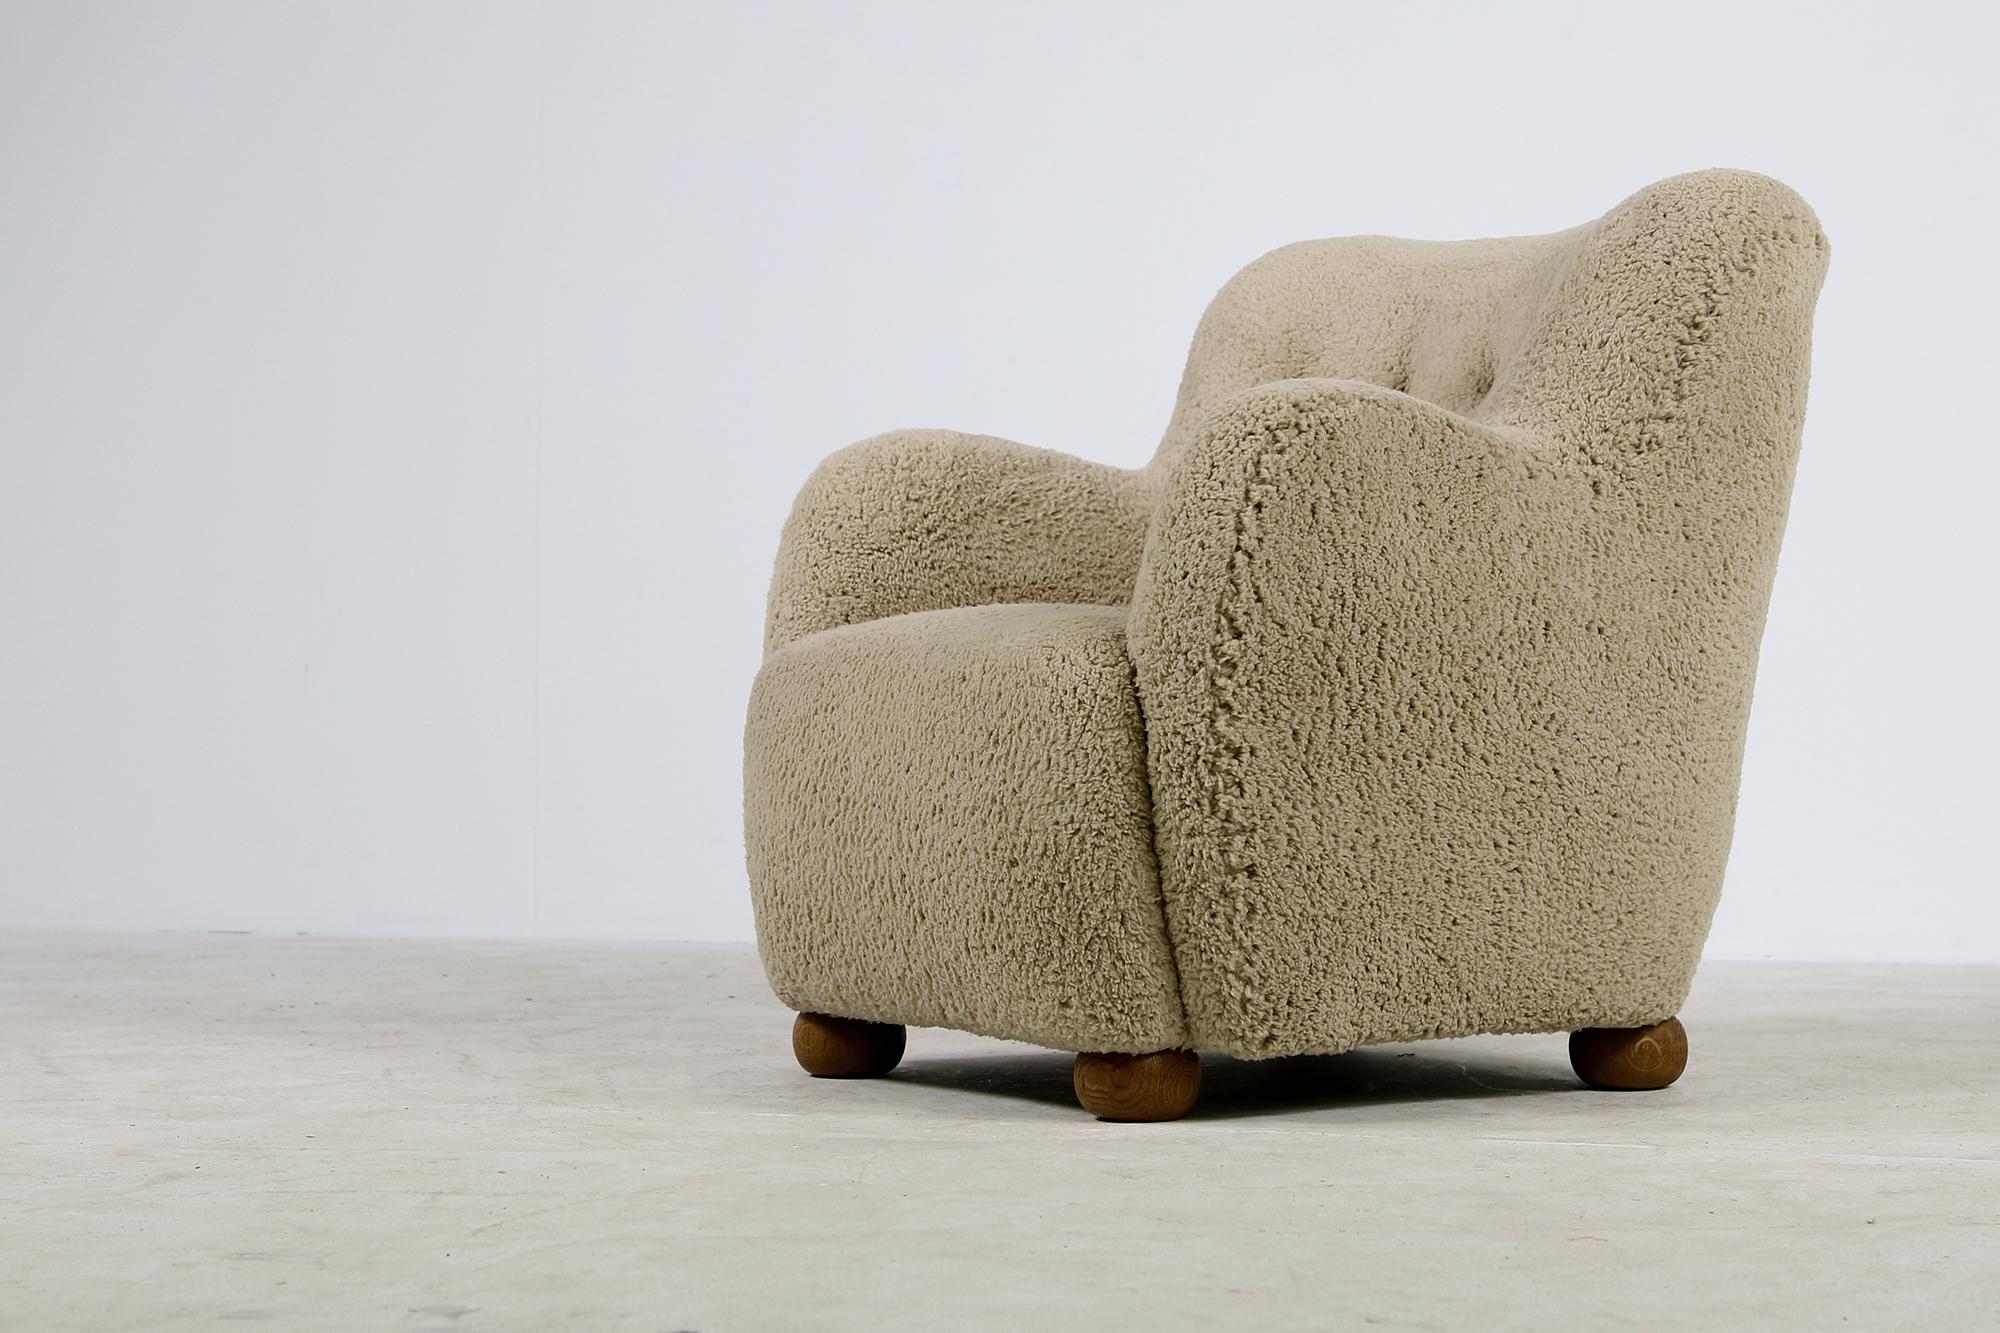 20th Century Scandinavian Modern Lounge Chair 1950 Teddy Fur & Leather, Sheepskin, Denmark B